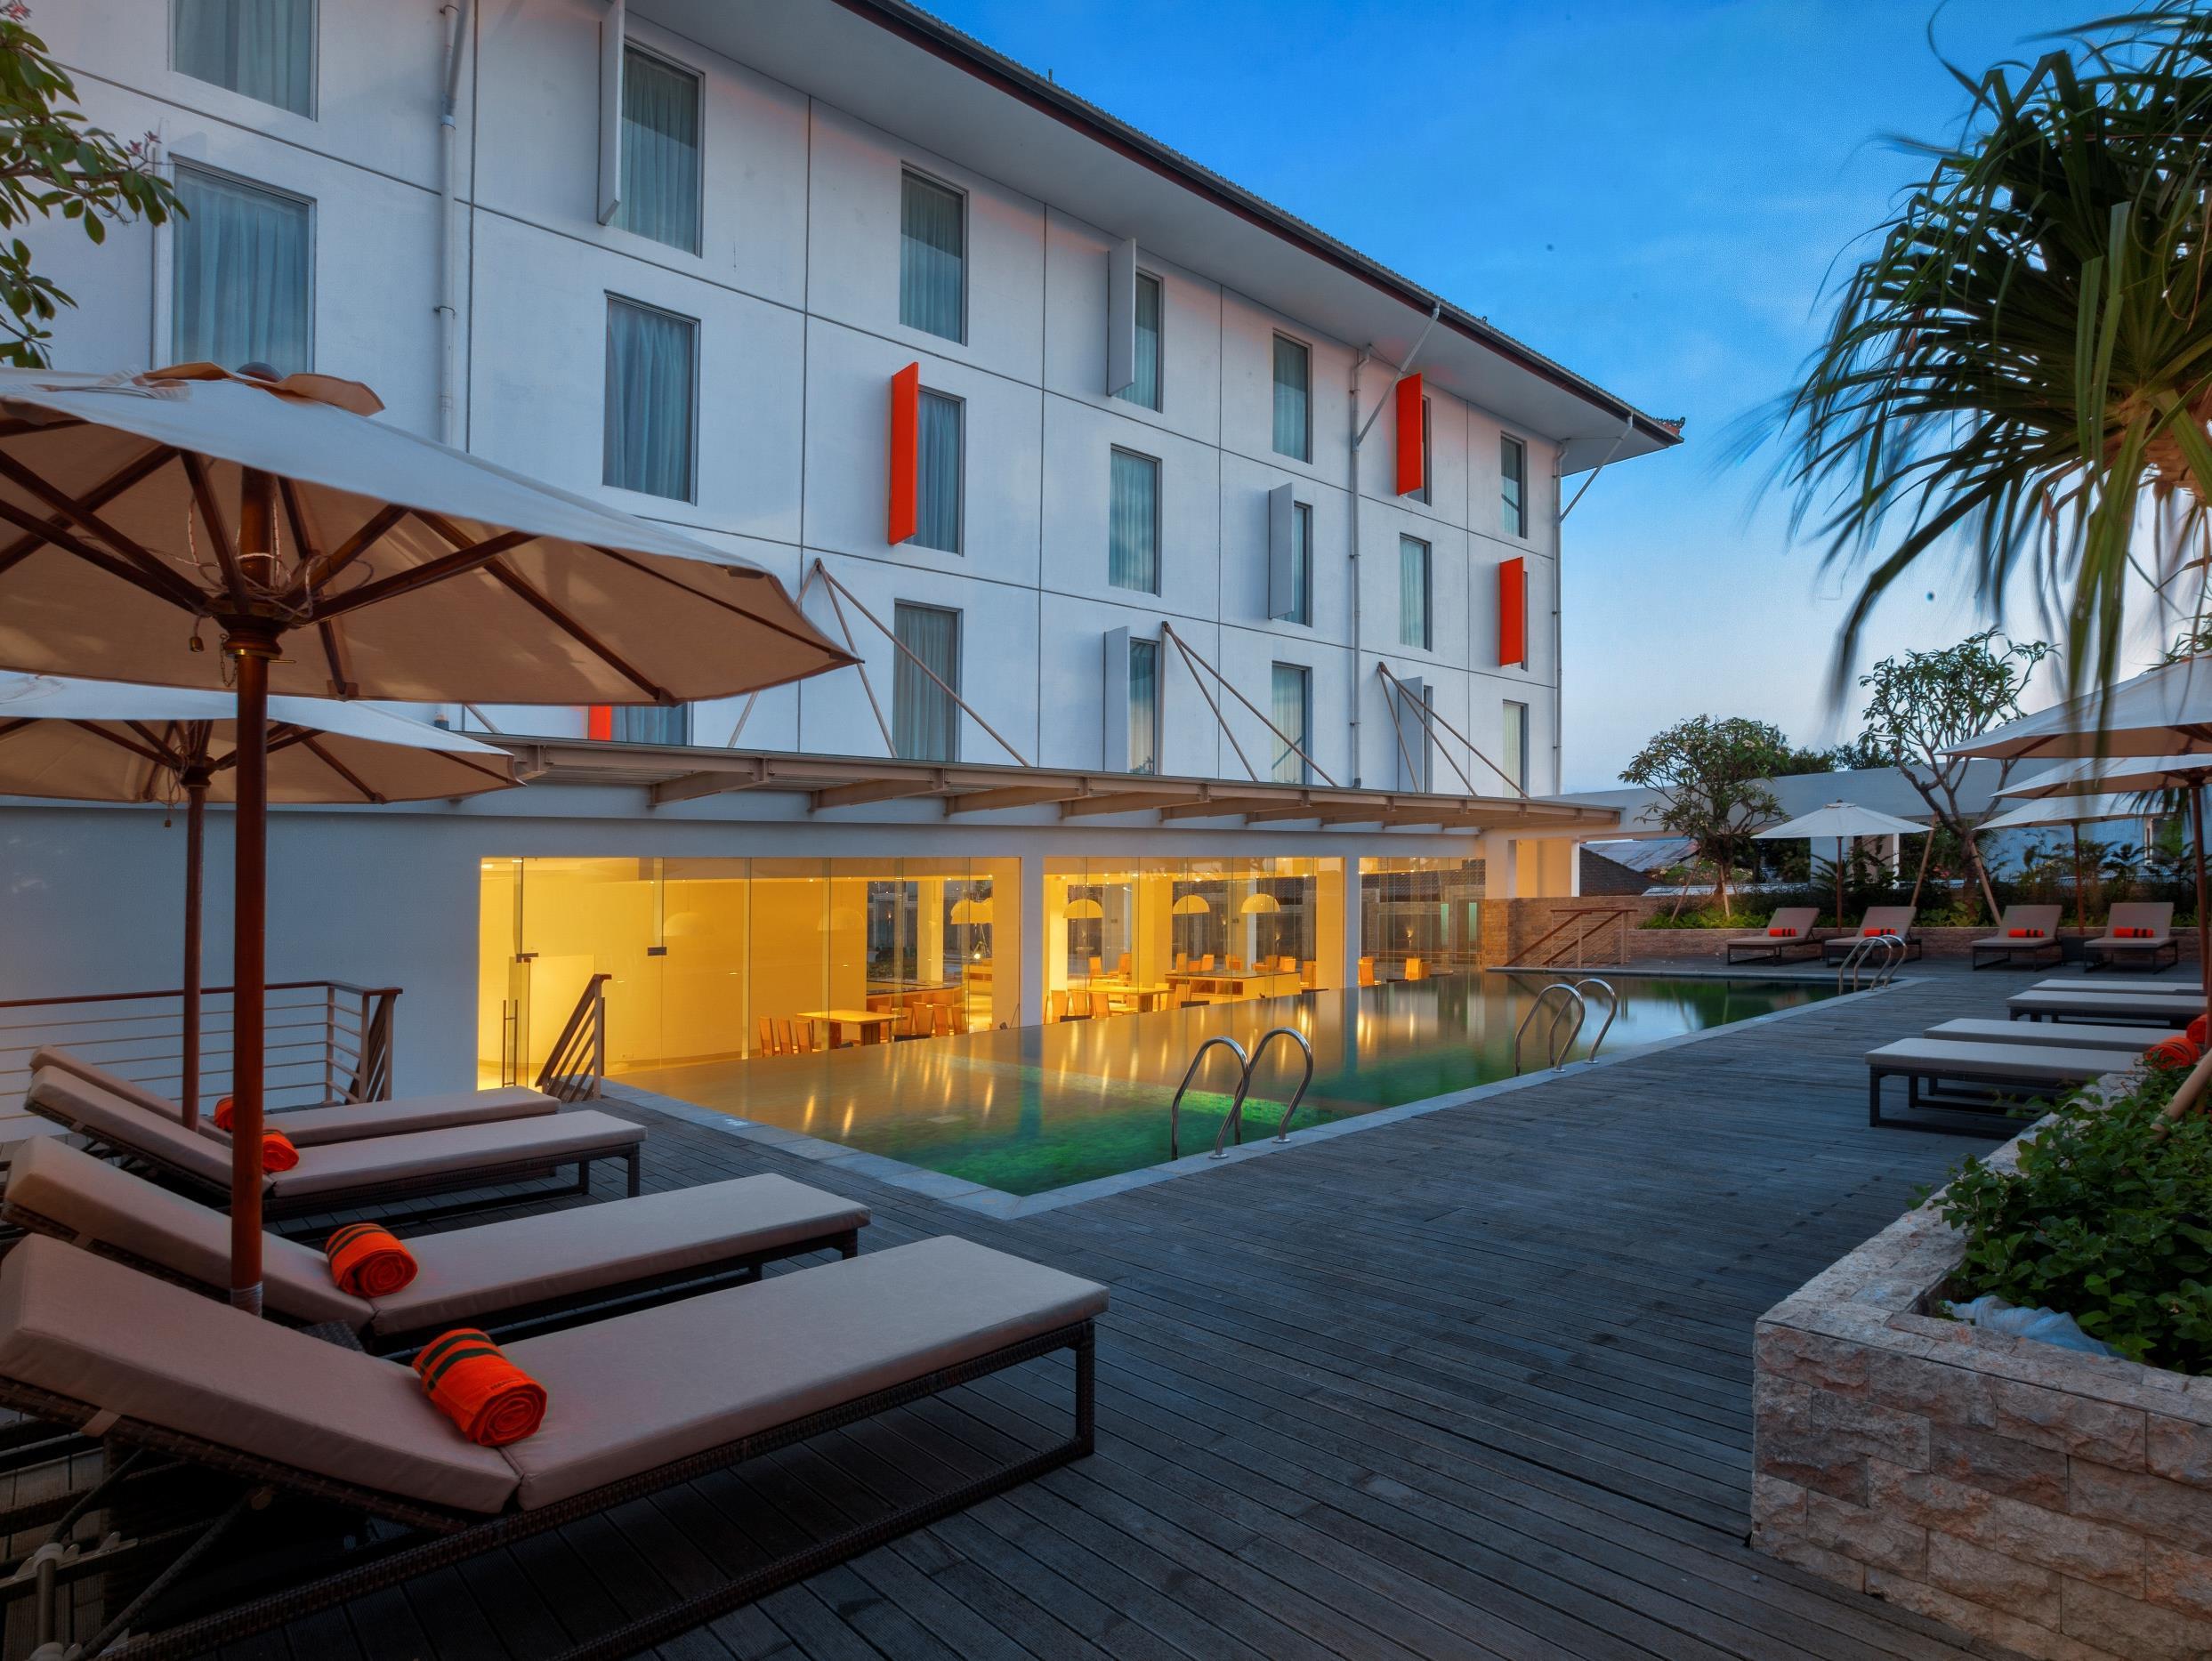 HARRIS Hotel and Conventions Denpasar Bali